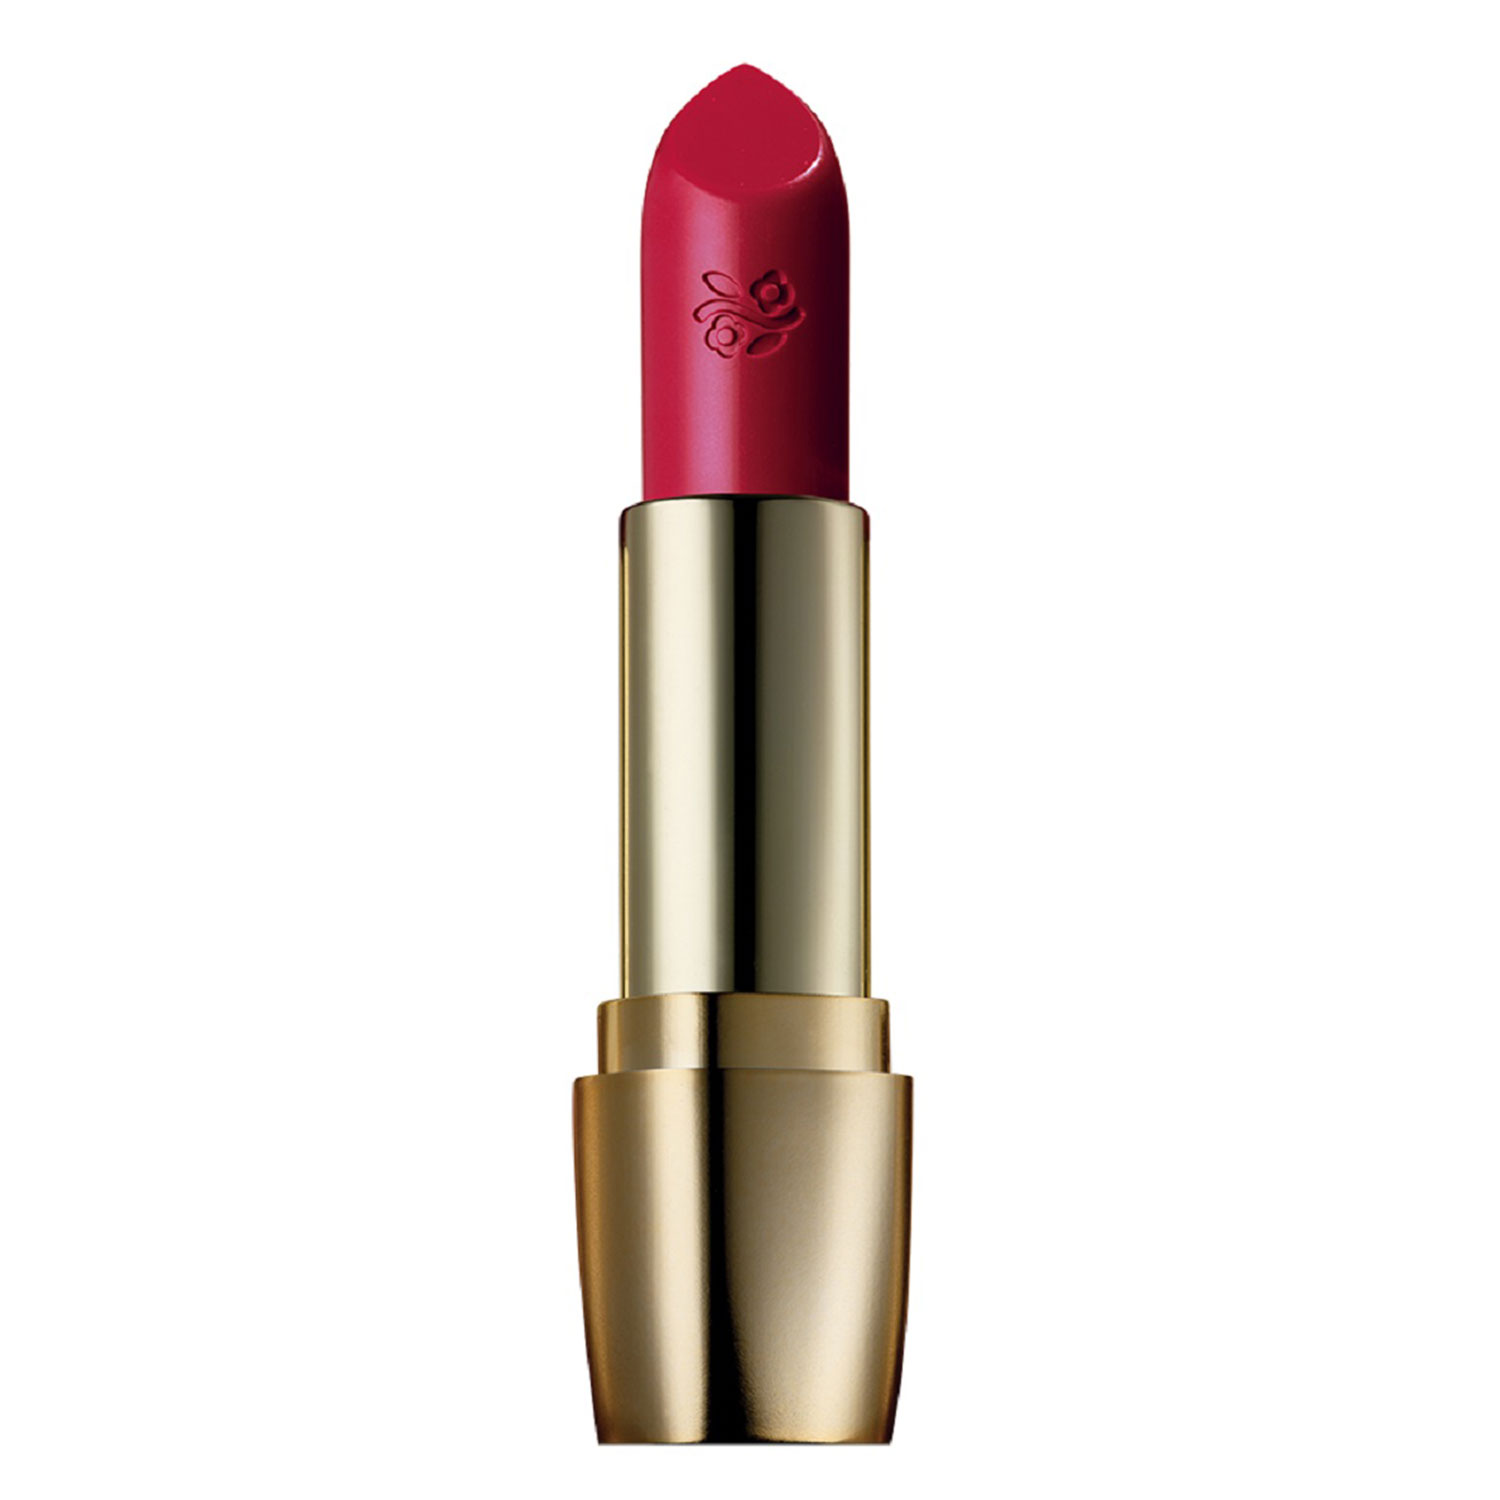 Deborah Milano Milano Red Lipstick, 4.4gm-31 Pink Coral